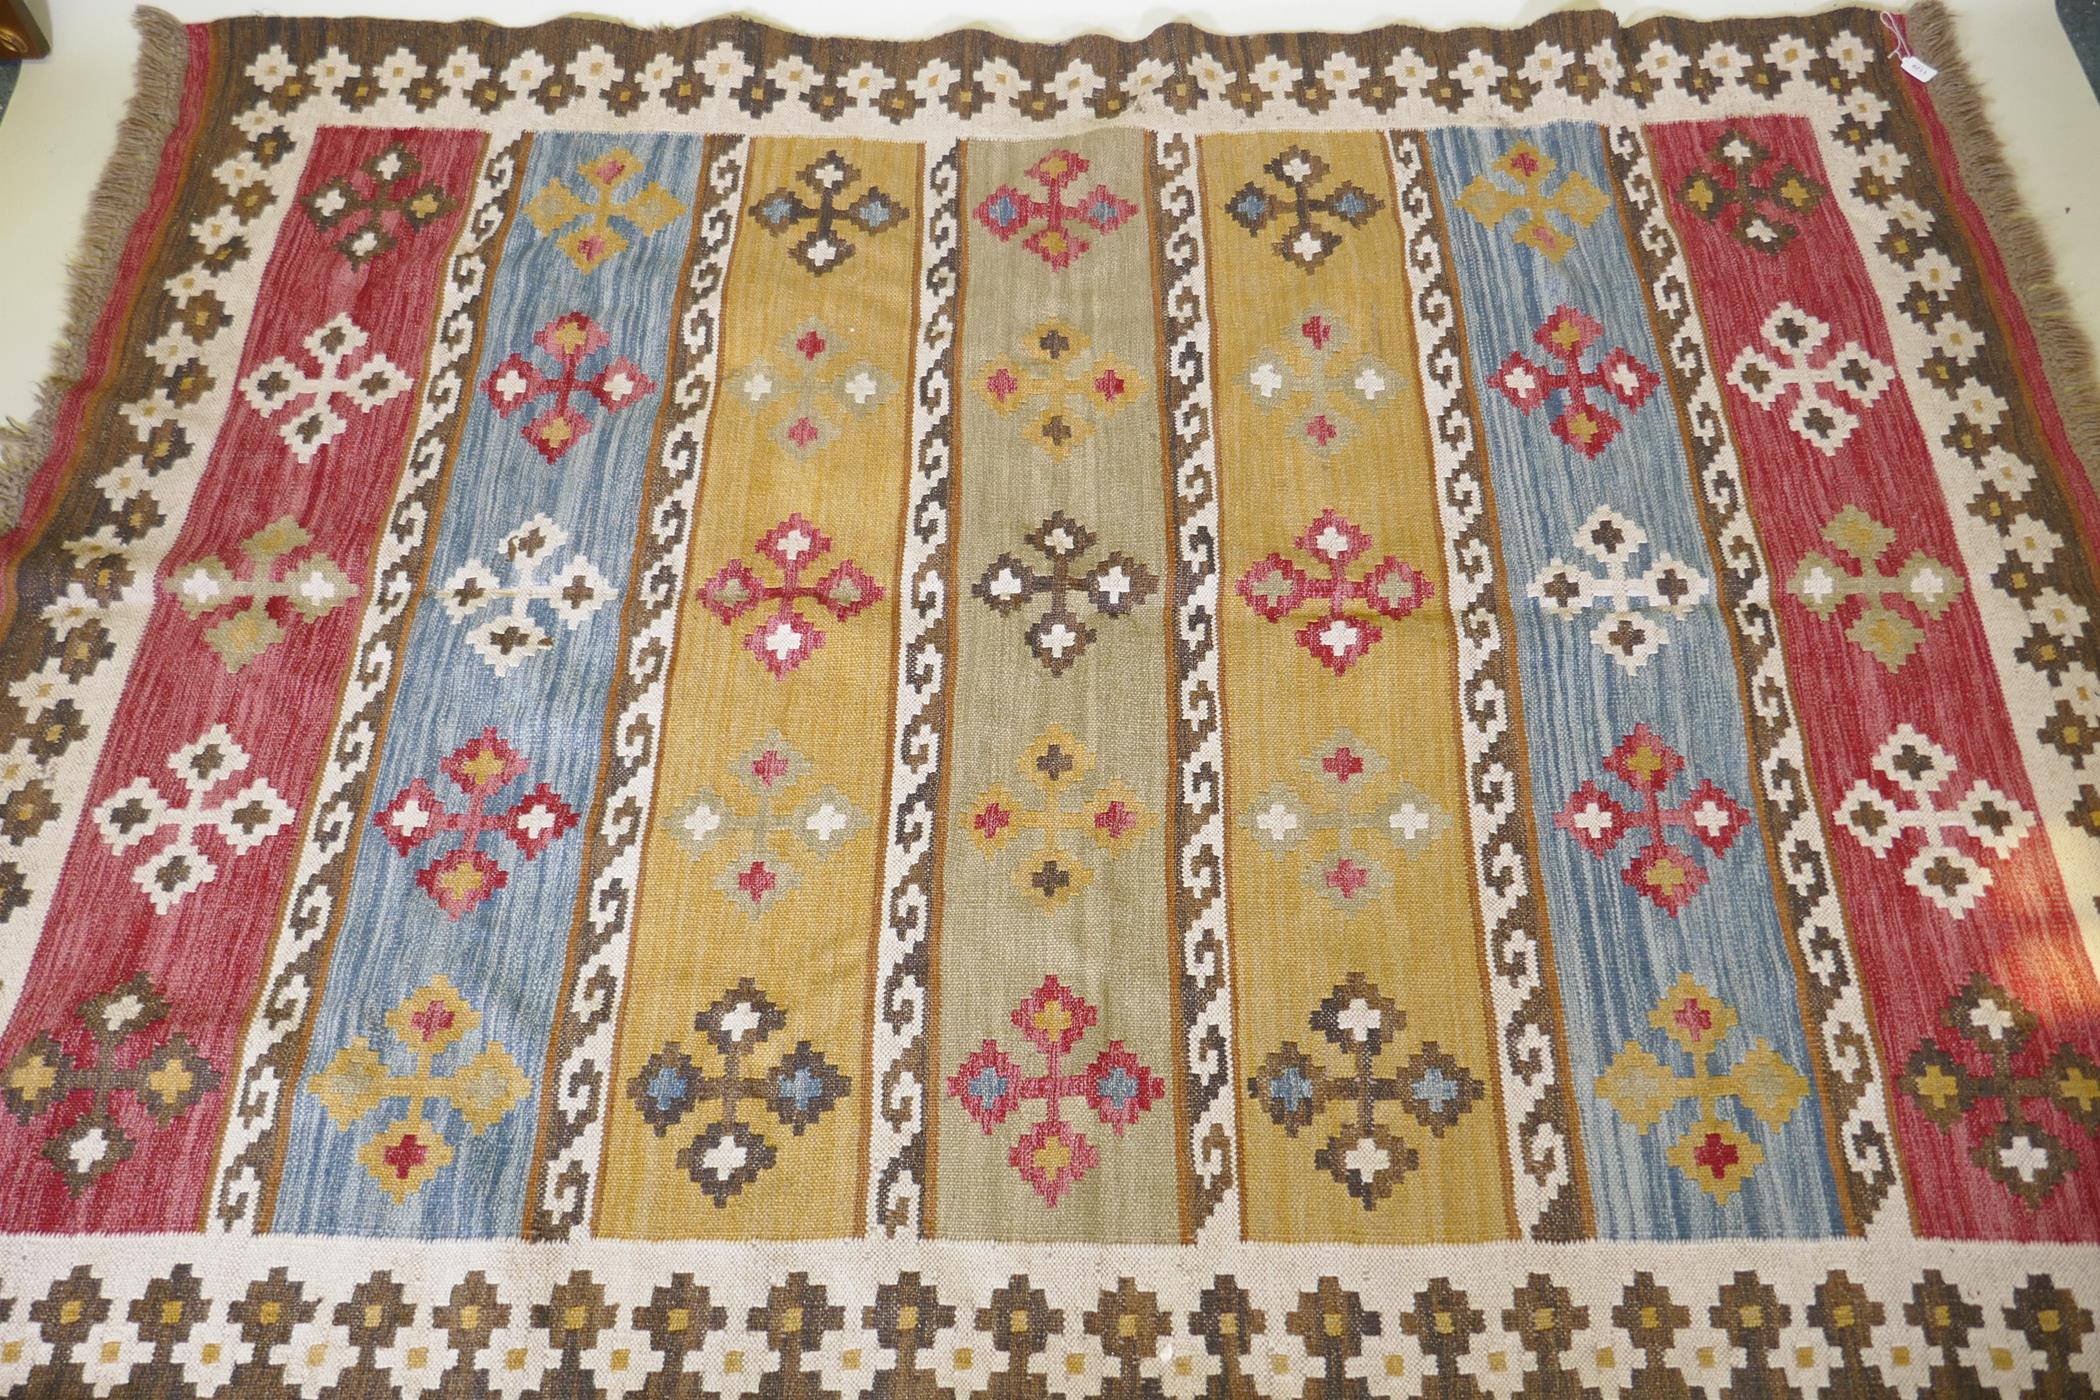 A woven wool kilim rug with geometric designs, 170 x 240cm